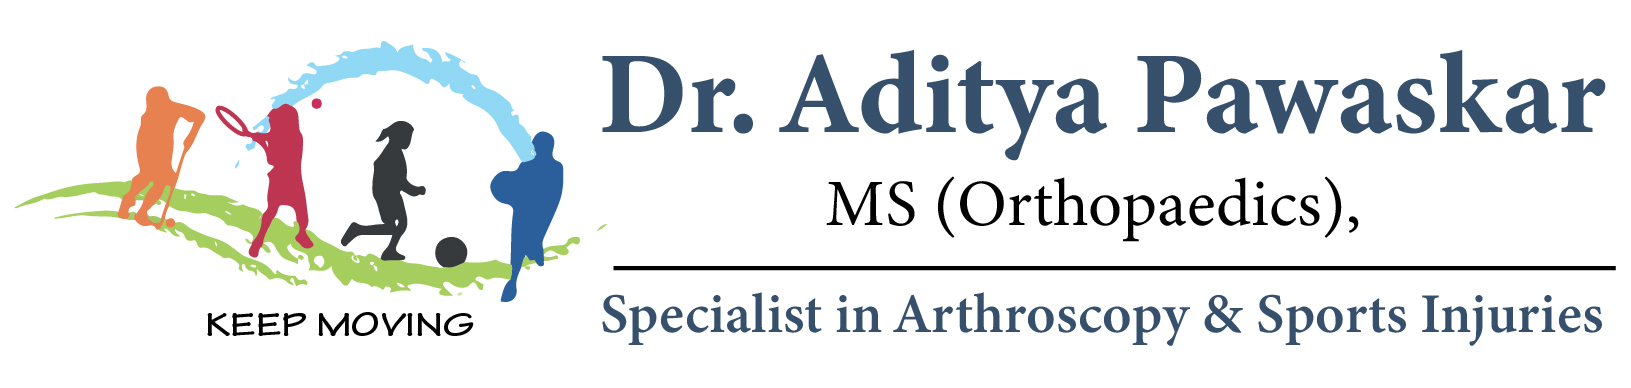 Best Orthopaedic Surgeon, Dr. Aditya Pawaskar, Specialist in Arthroscopy and Sports Injuries in Mumbai, Maharshtra in Matunga and Tardeo Road.